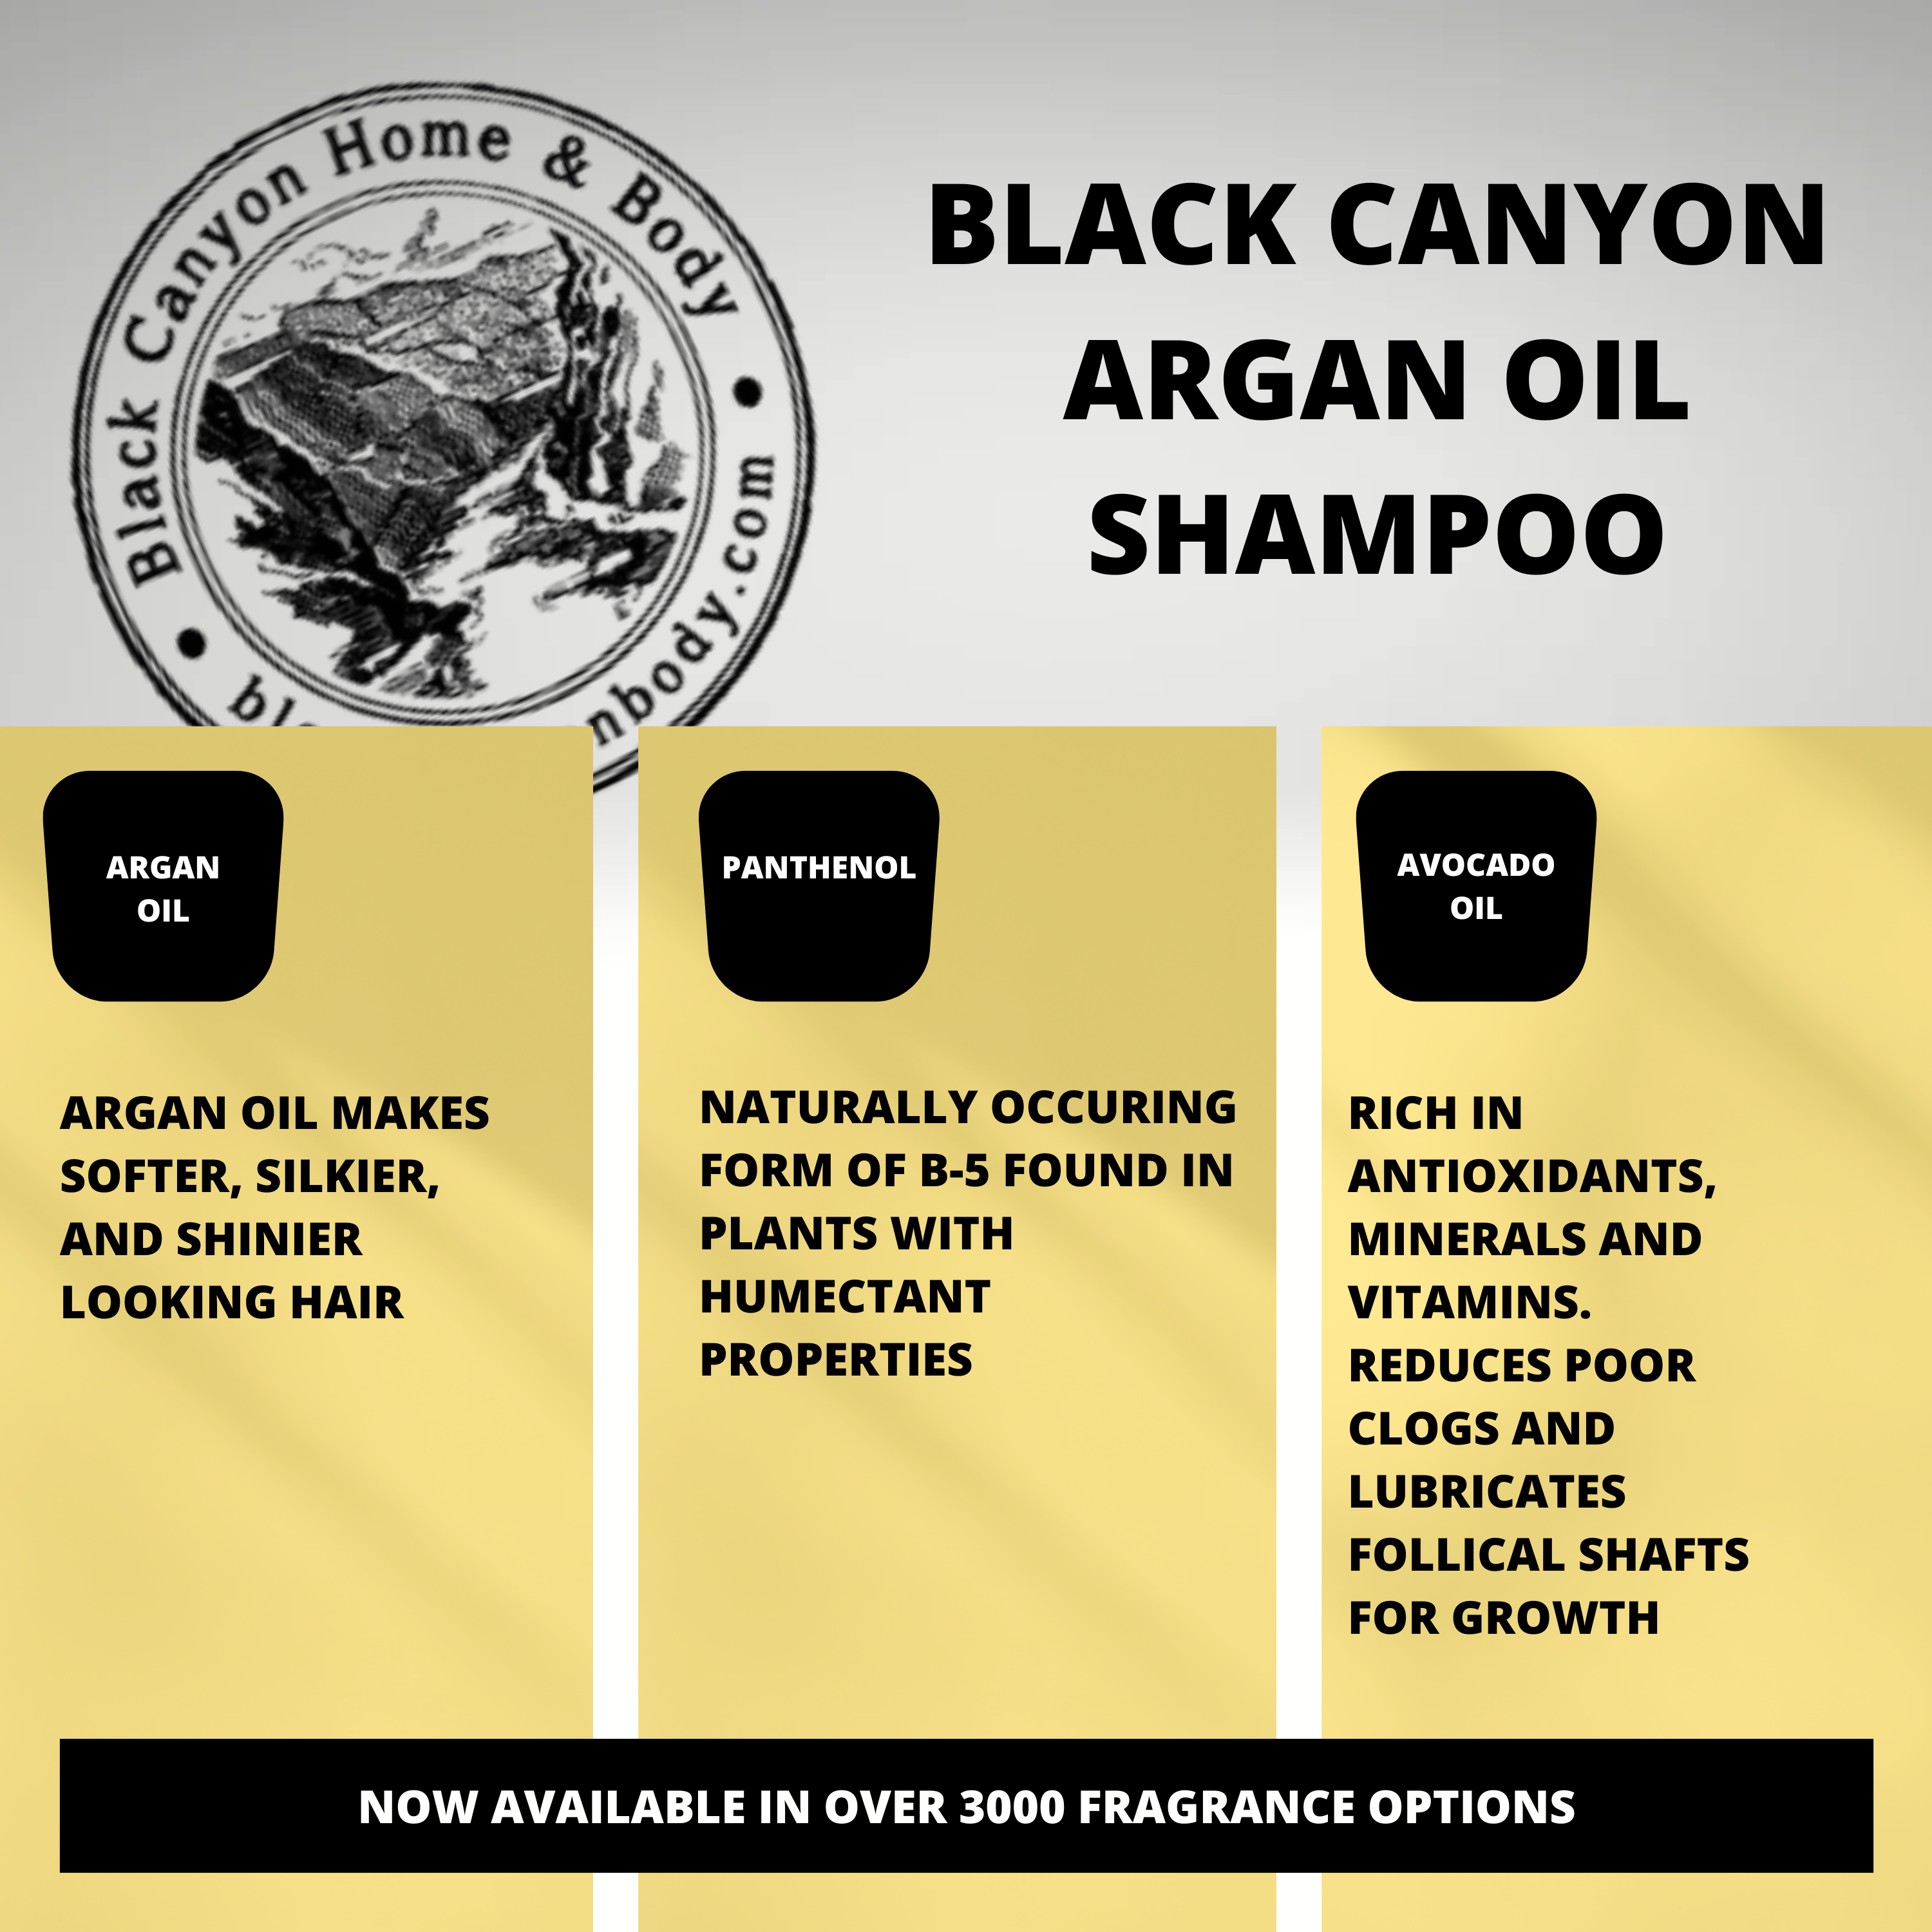 Black Canyon Acai & Mangosteen Scented Shampoo with Argan Oil